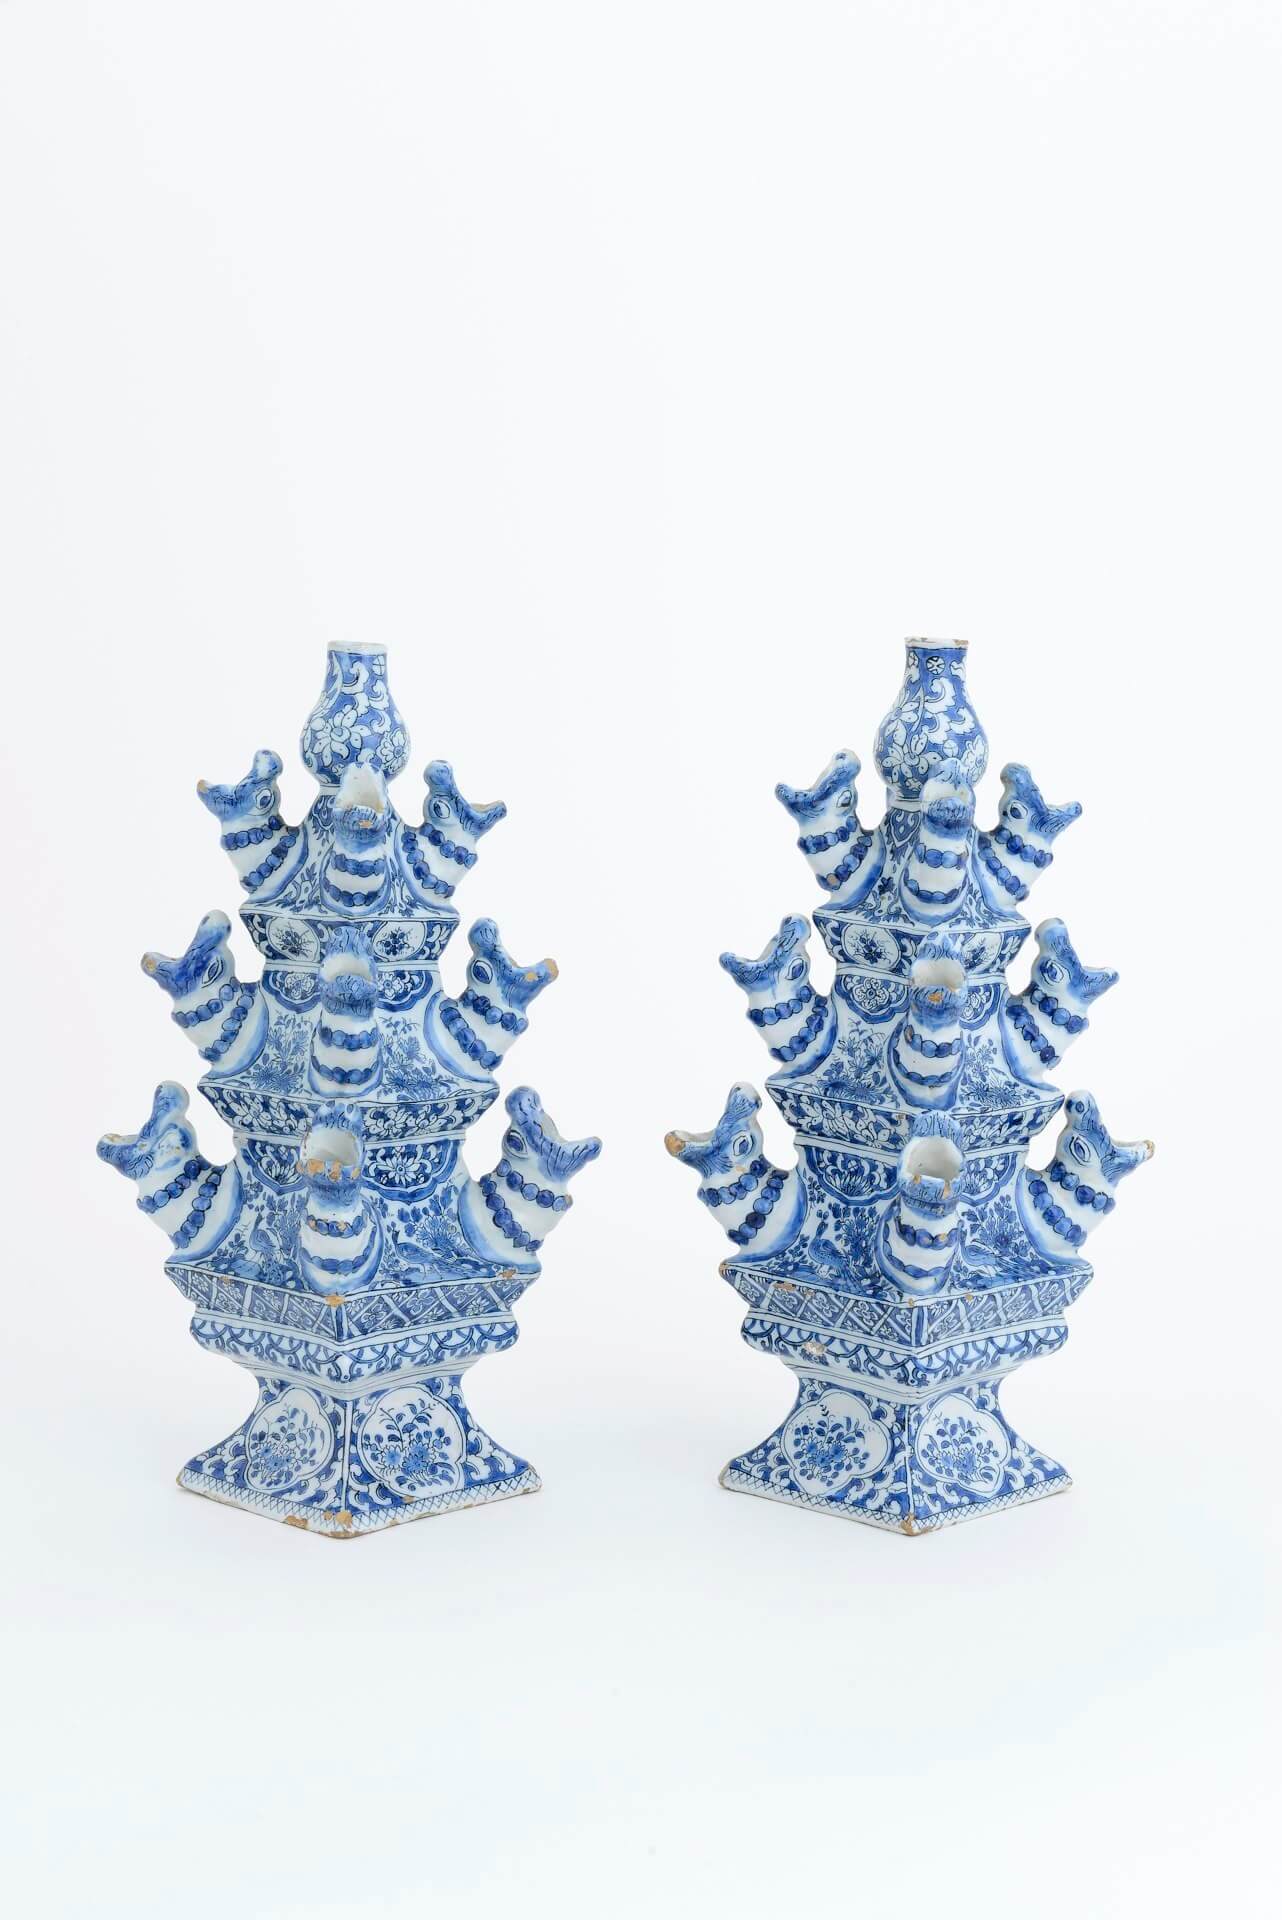 Delft Holland Ceramics a pair of pyramid flower vases